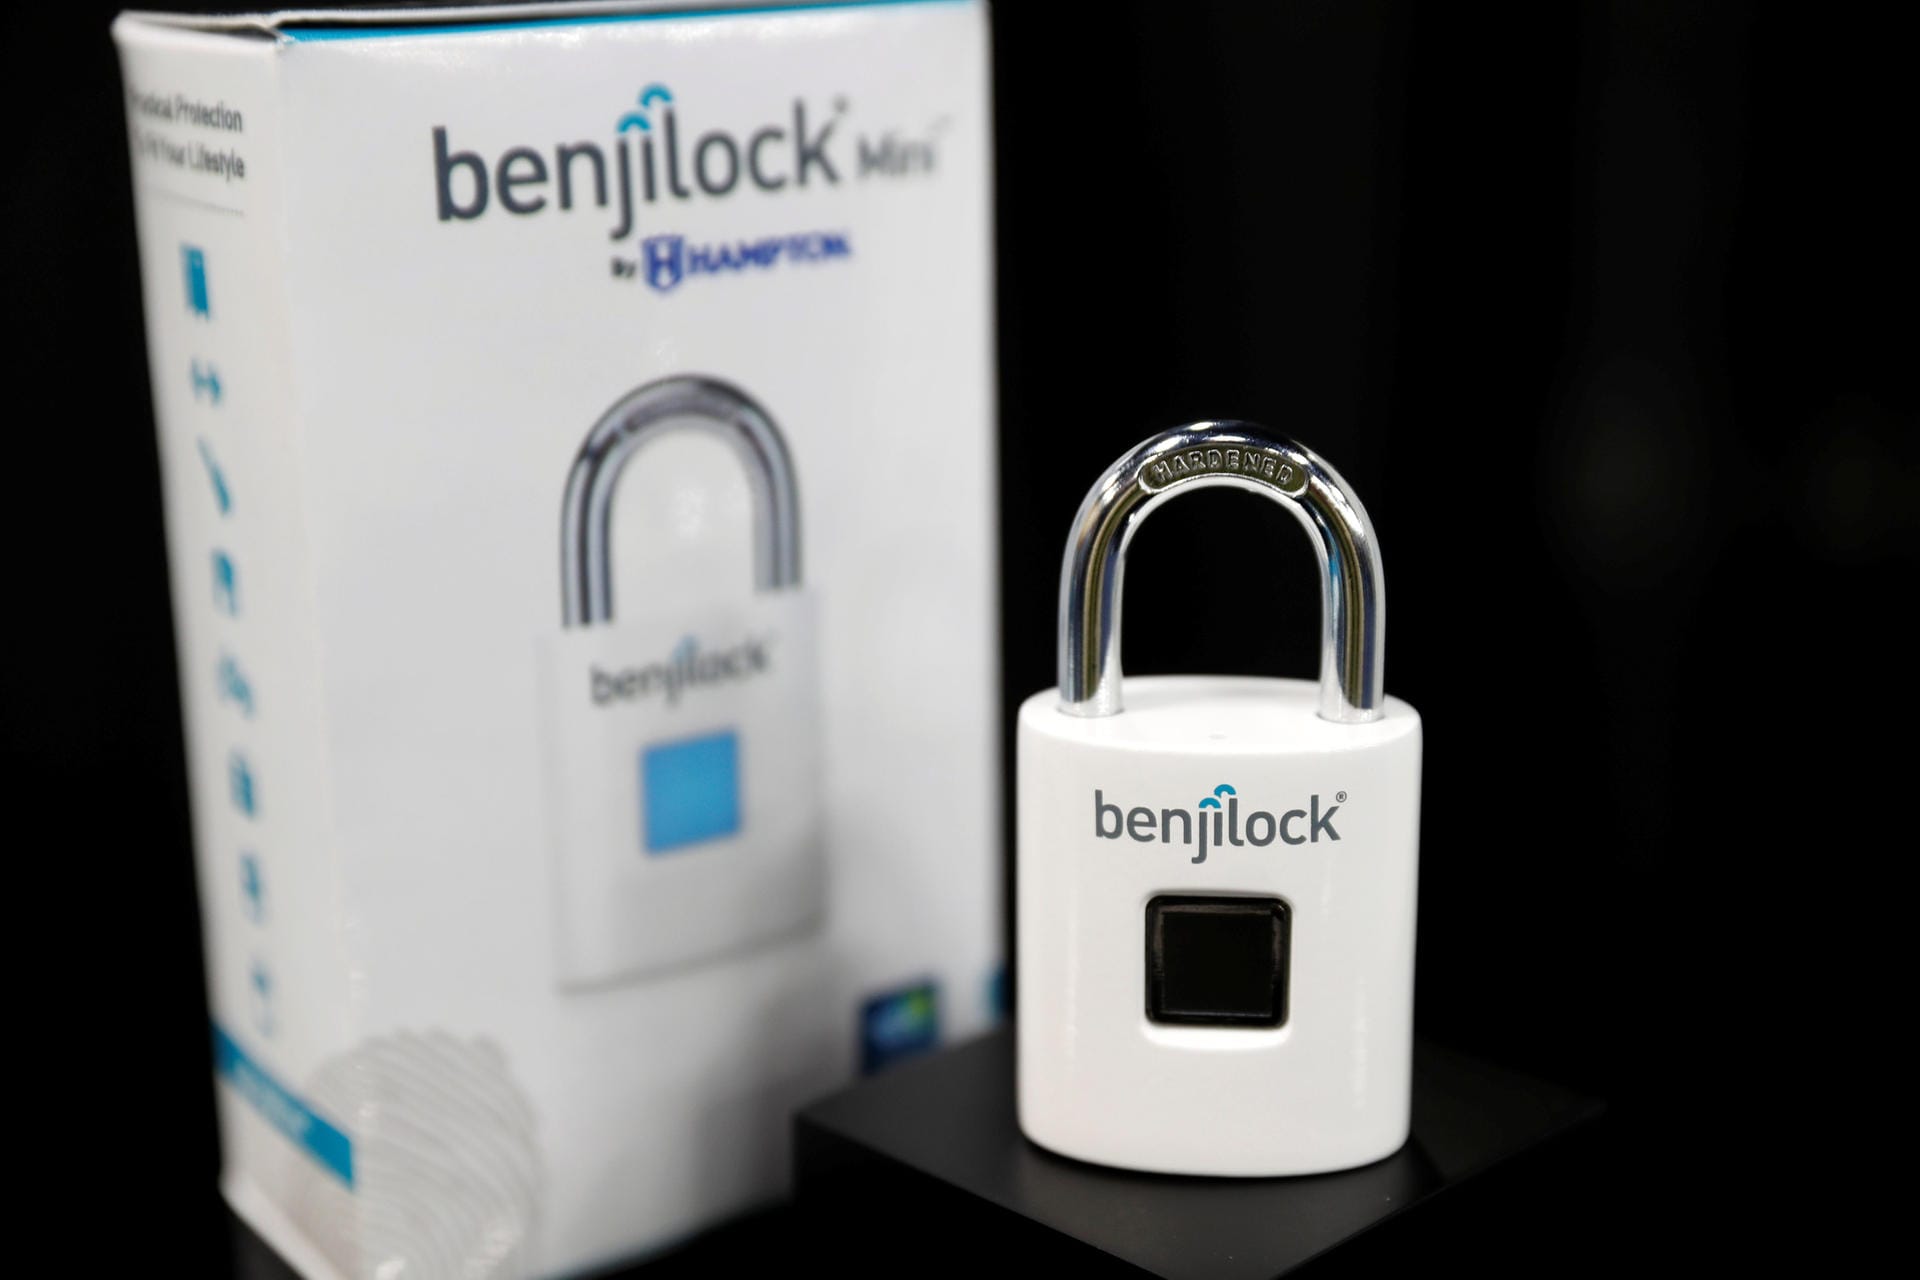 Wertvolle Gegenstände sollen dank BenjiLock bald per Fingerprint-Schloss gesichert werden, sodass niemand mehr unterlaubt Zugang hat.